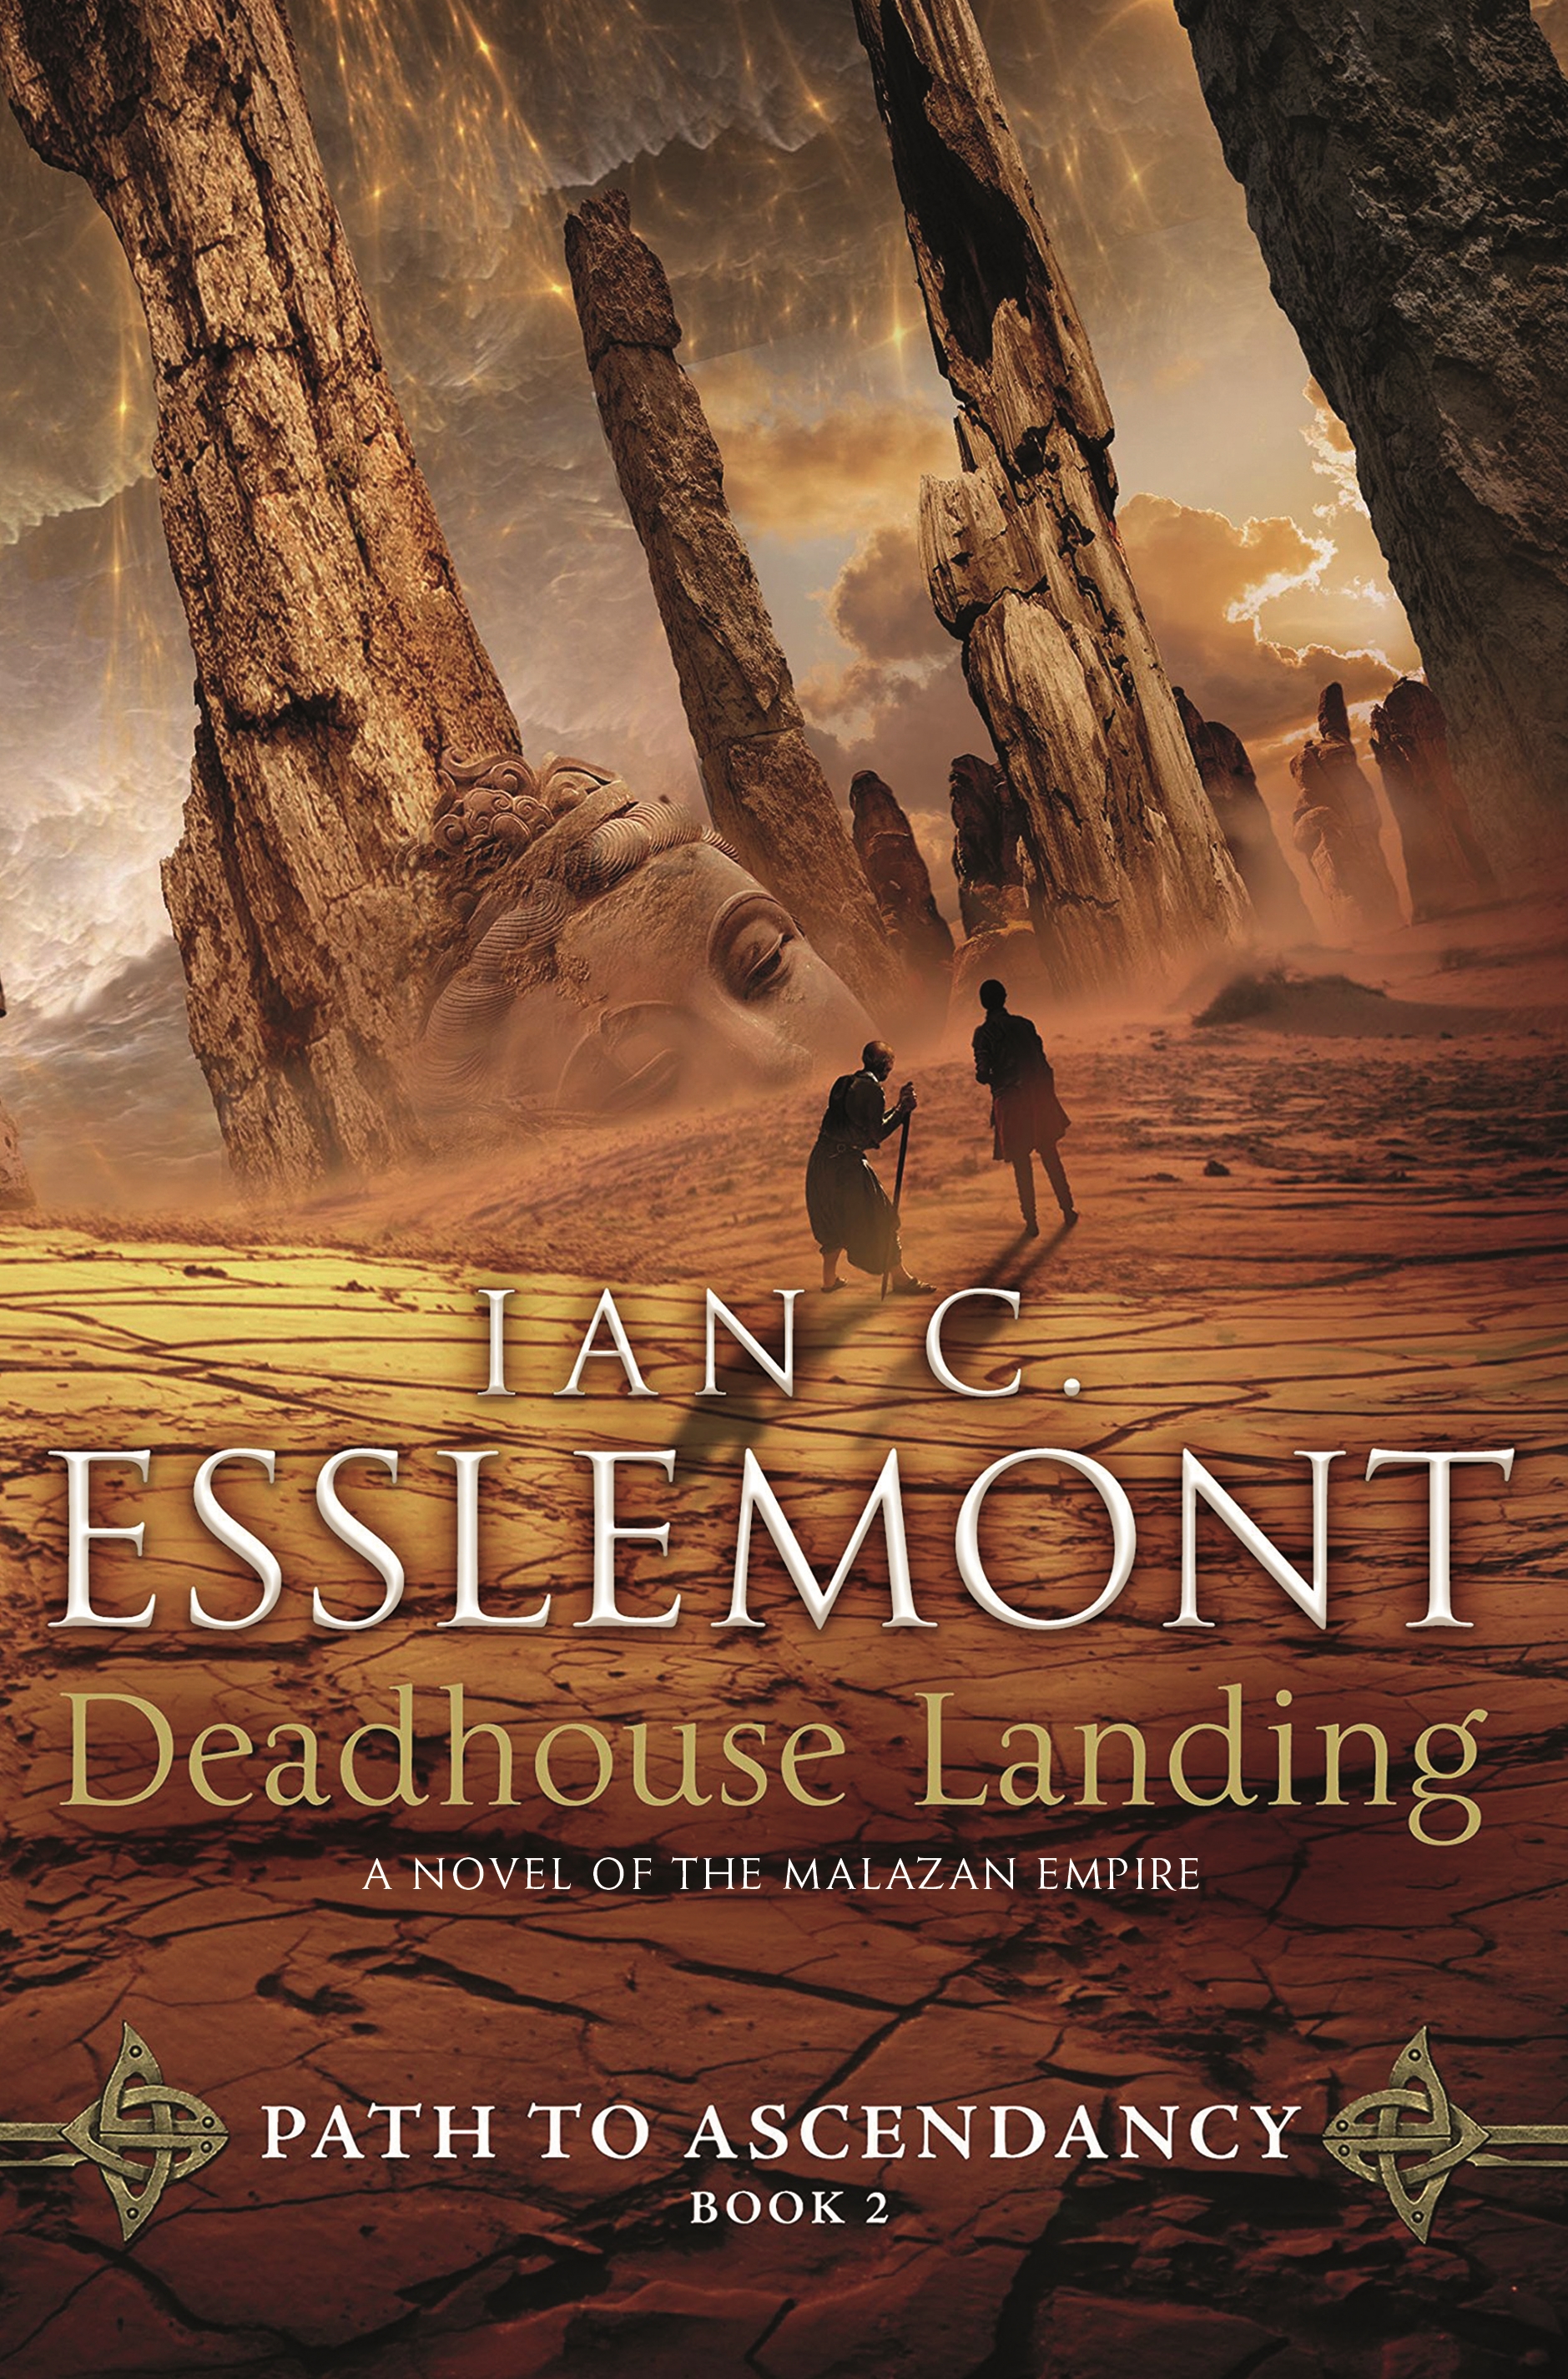 Deadhouse Landing : Path to Ascendancy, Book 2 (A Novel of the Malazan Empire) by Ian C. Esslemont